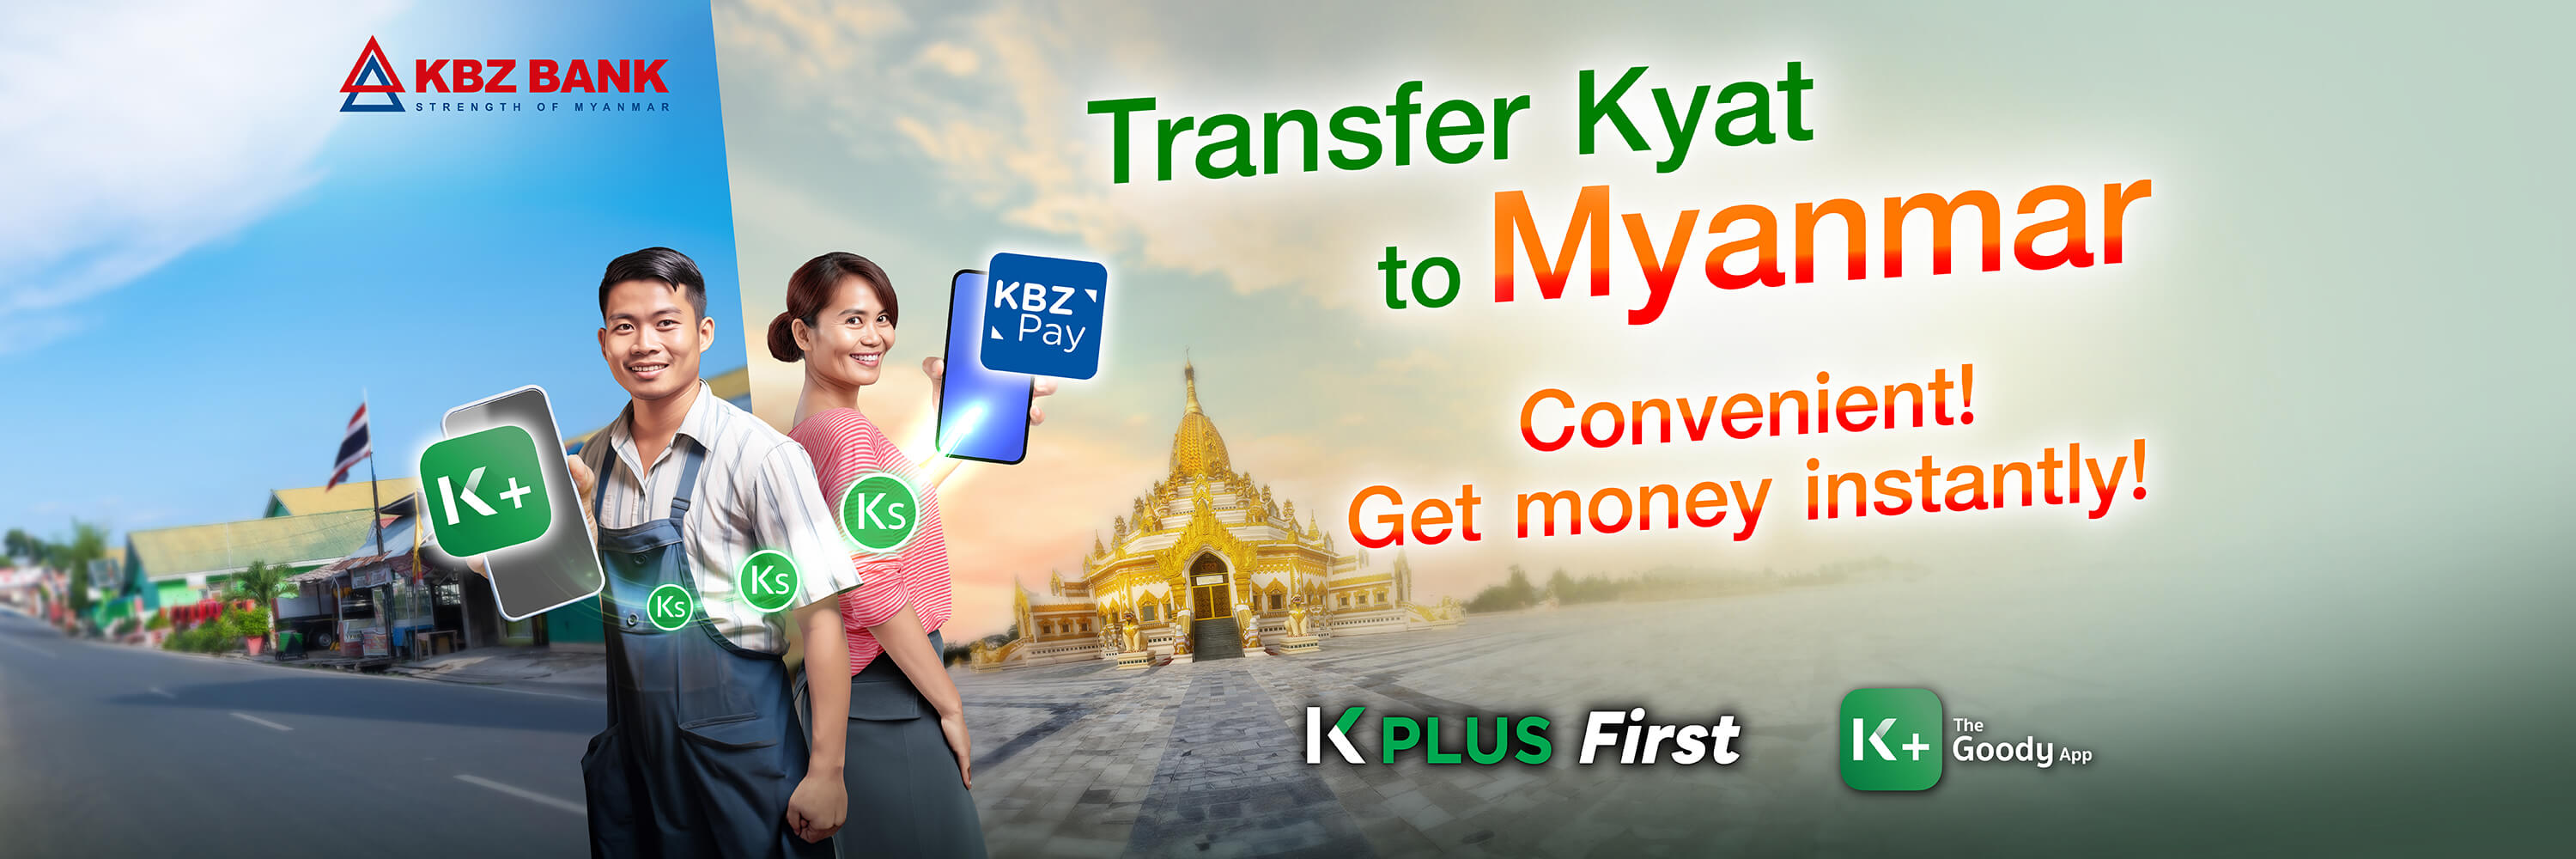 International Money Transfer to Myanmar hero-banner